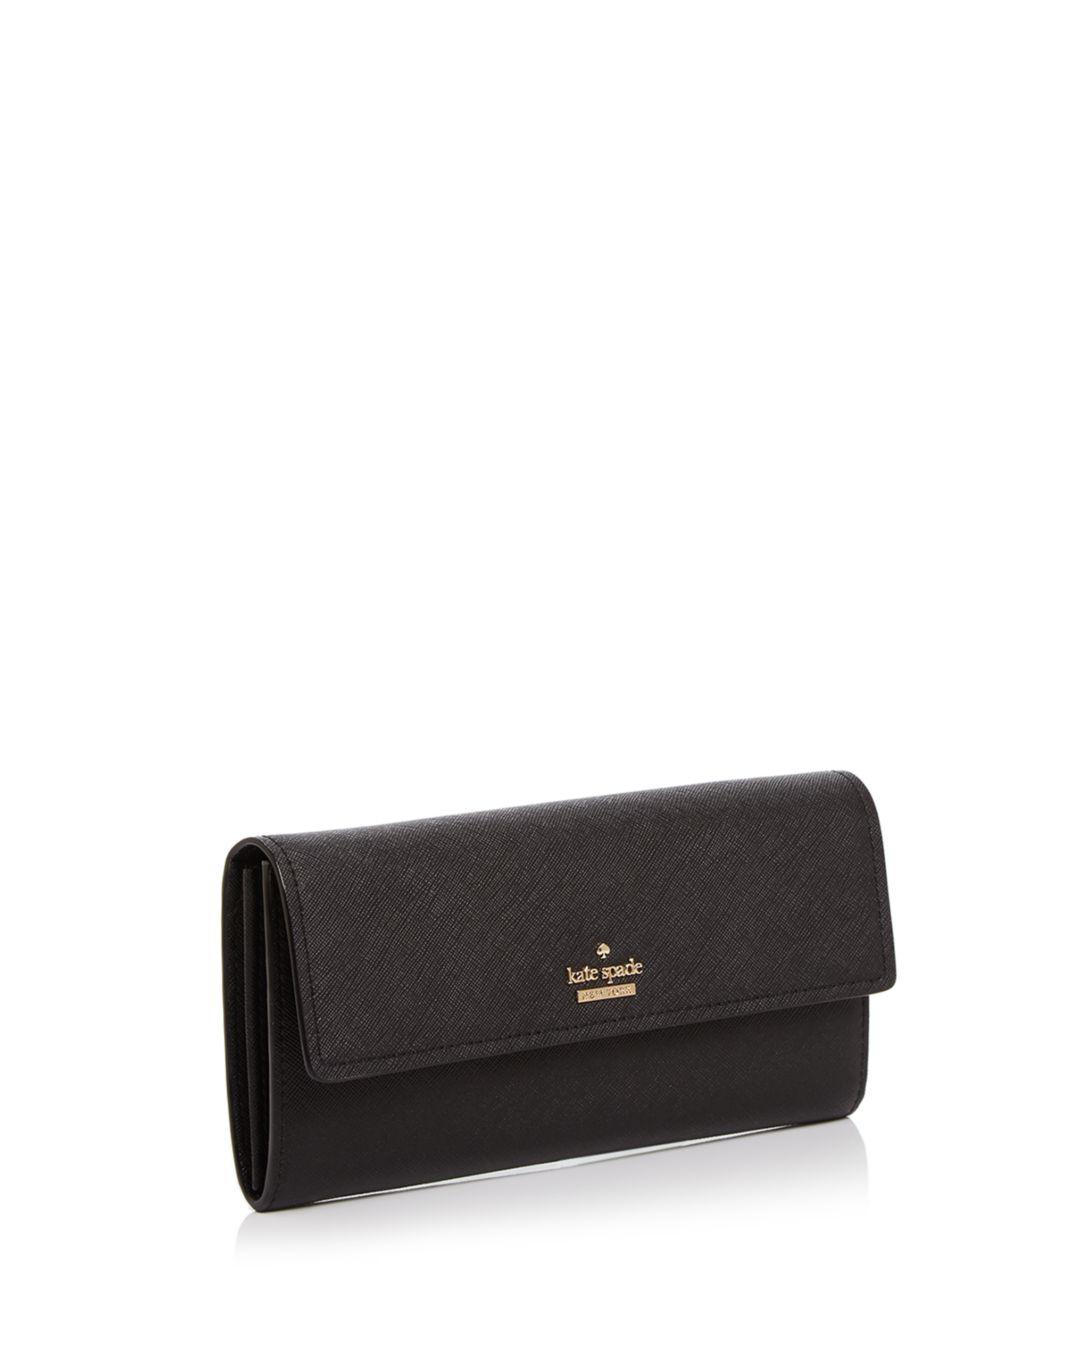 Kate Spade Cameron Street Kinsley Leather Wallet in Black | Lyst